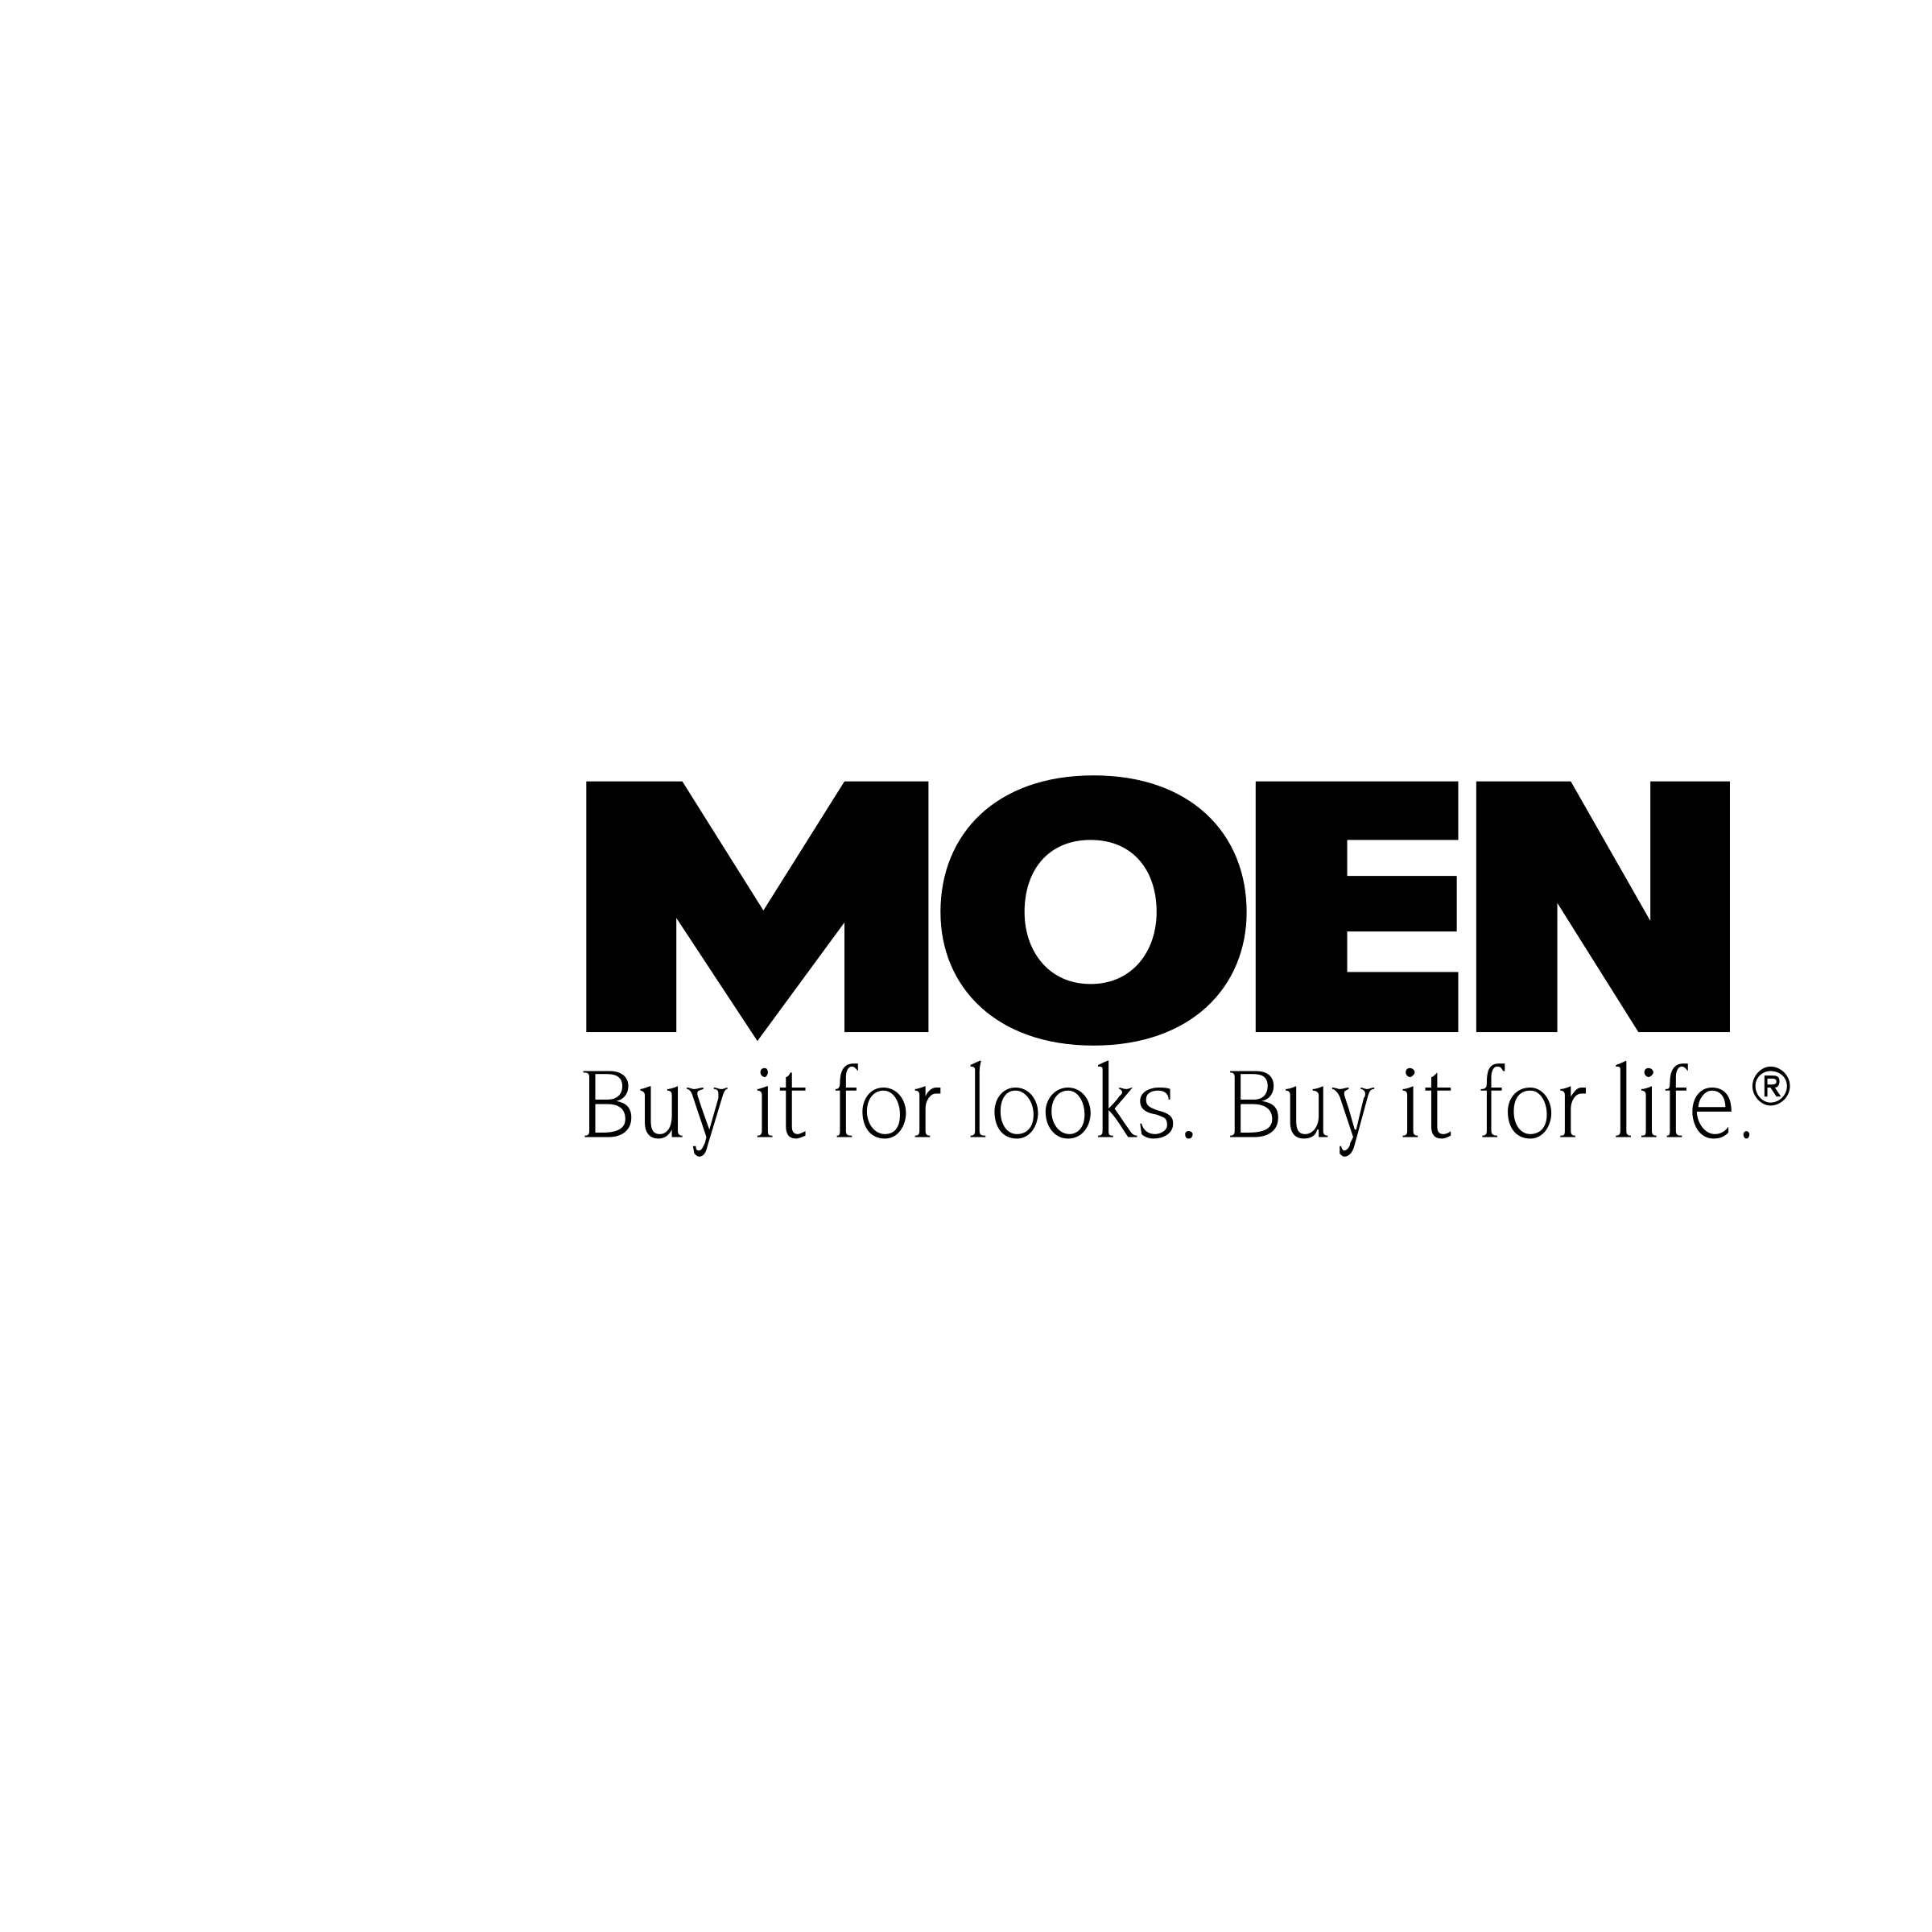 Moen Logo - Moen Logo PNG Transparent & SVG Vector - Freebie Supply